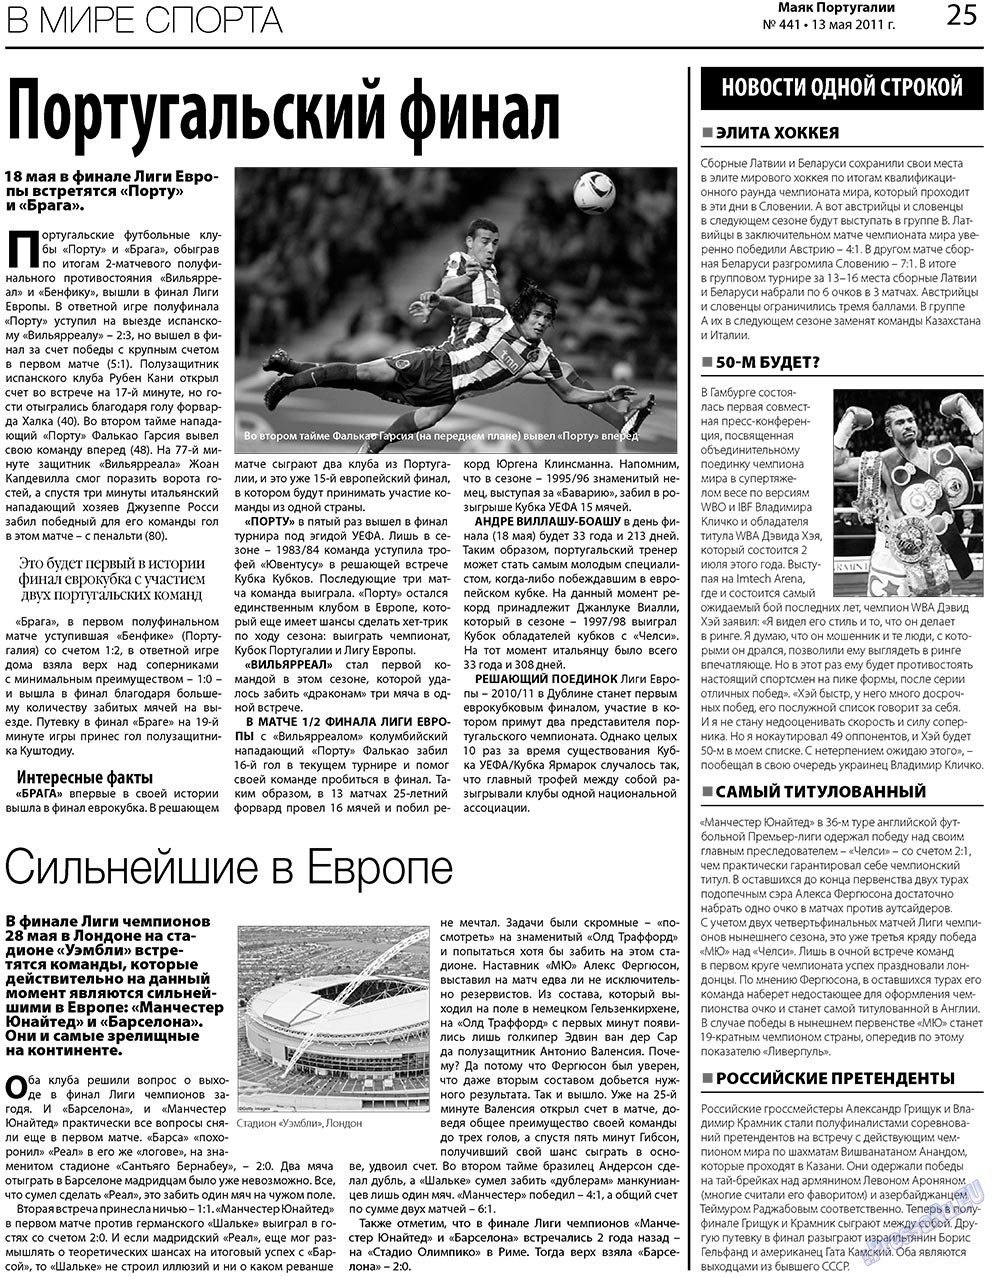 Маяк Португалии, газета. 2011 №441 стр.25